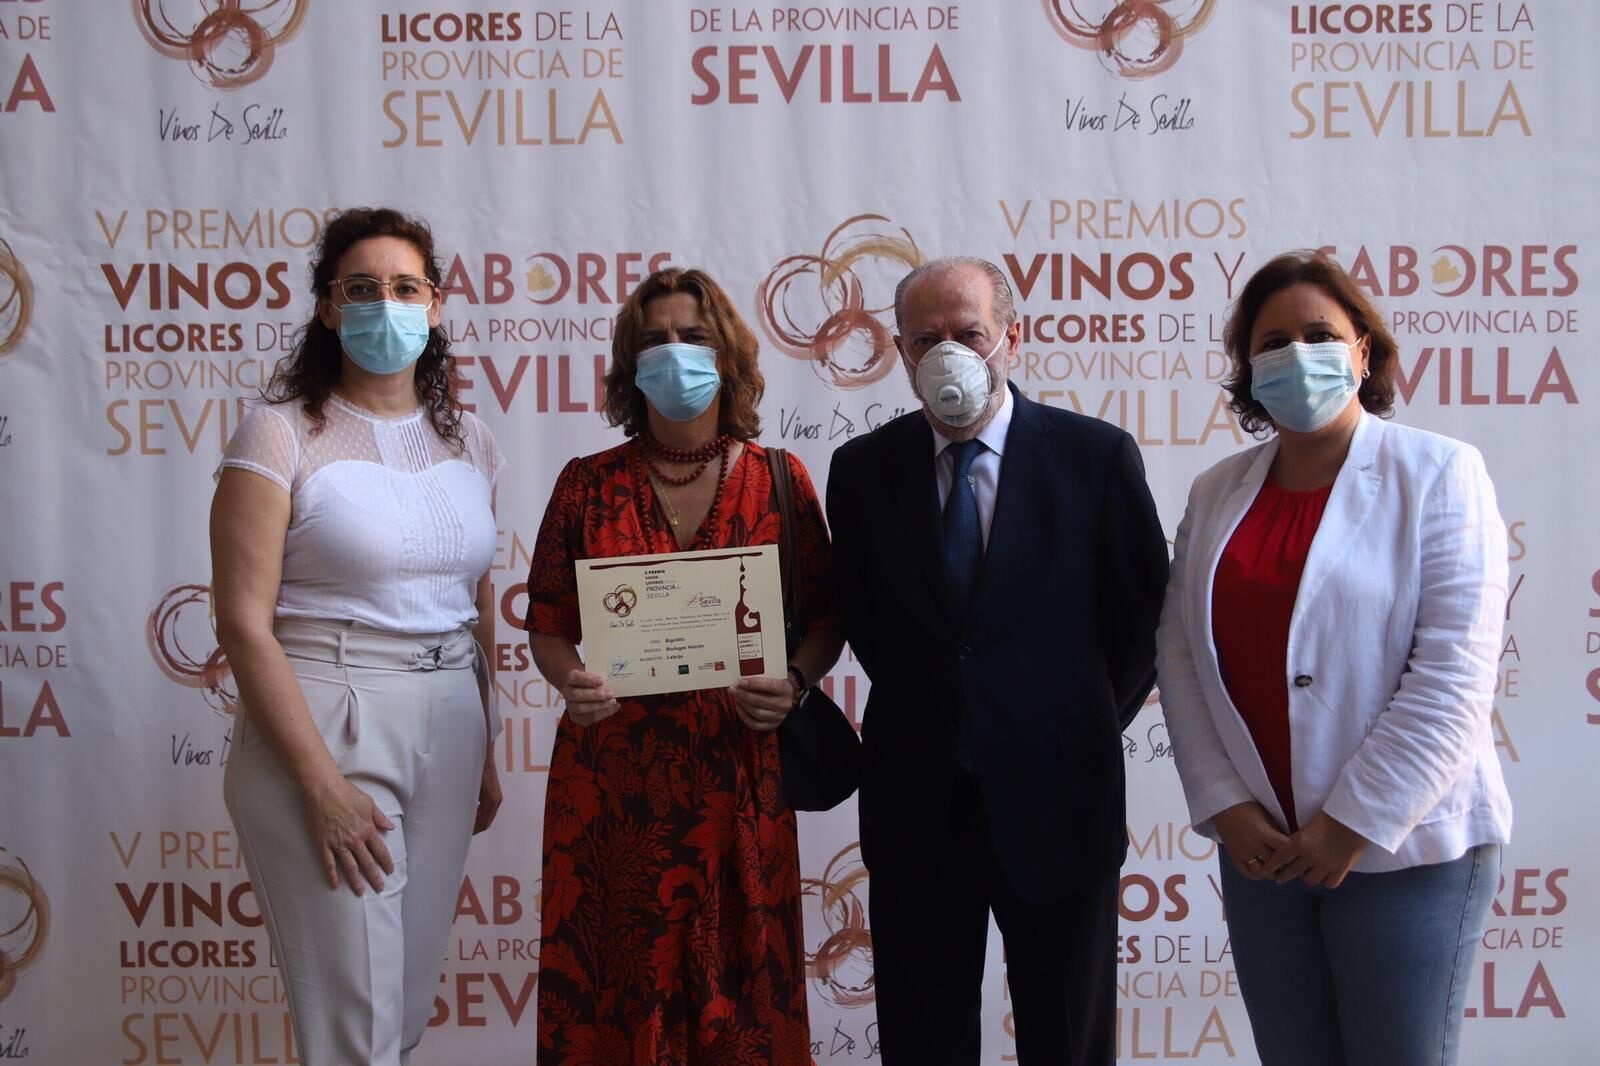 V Premios vinos provincia sevilla (2)